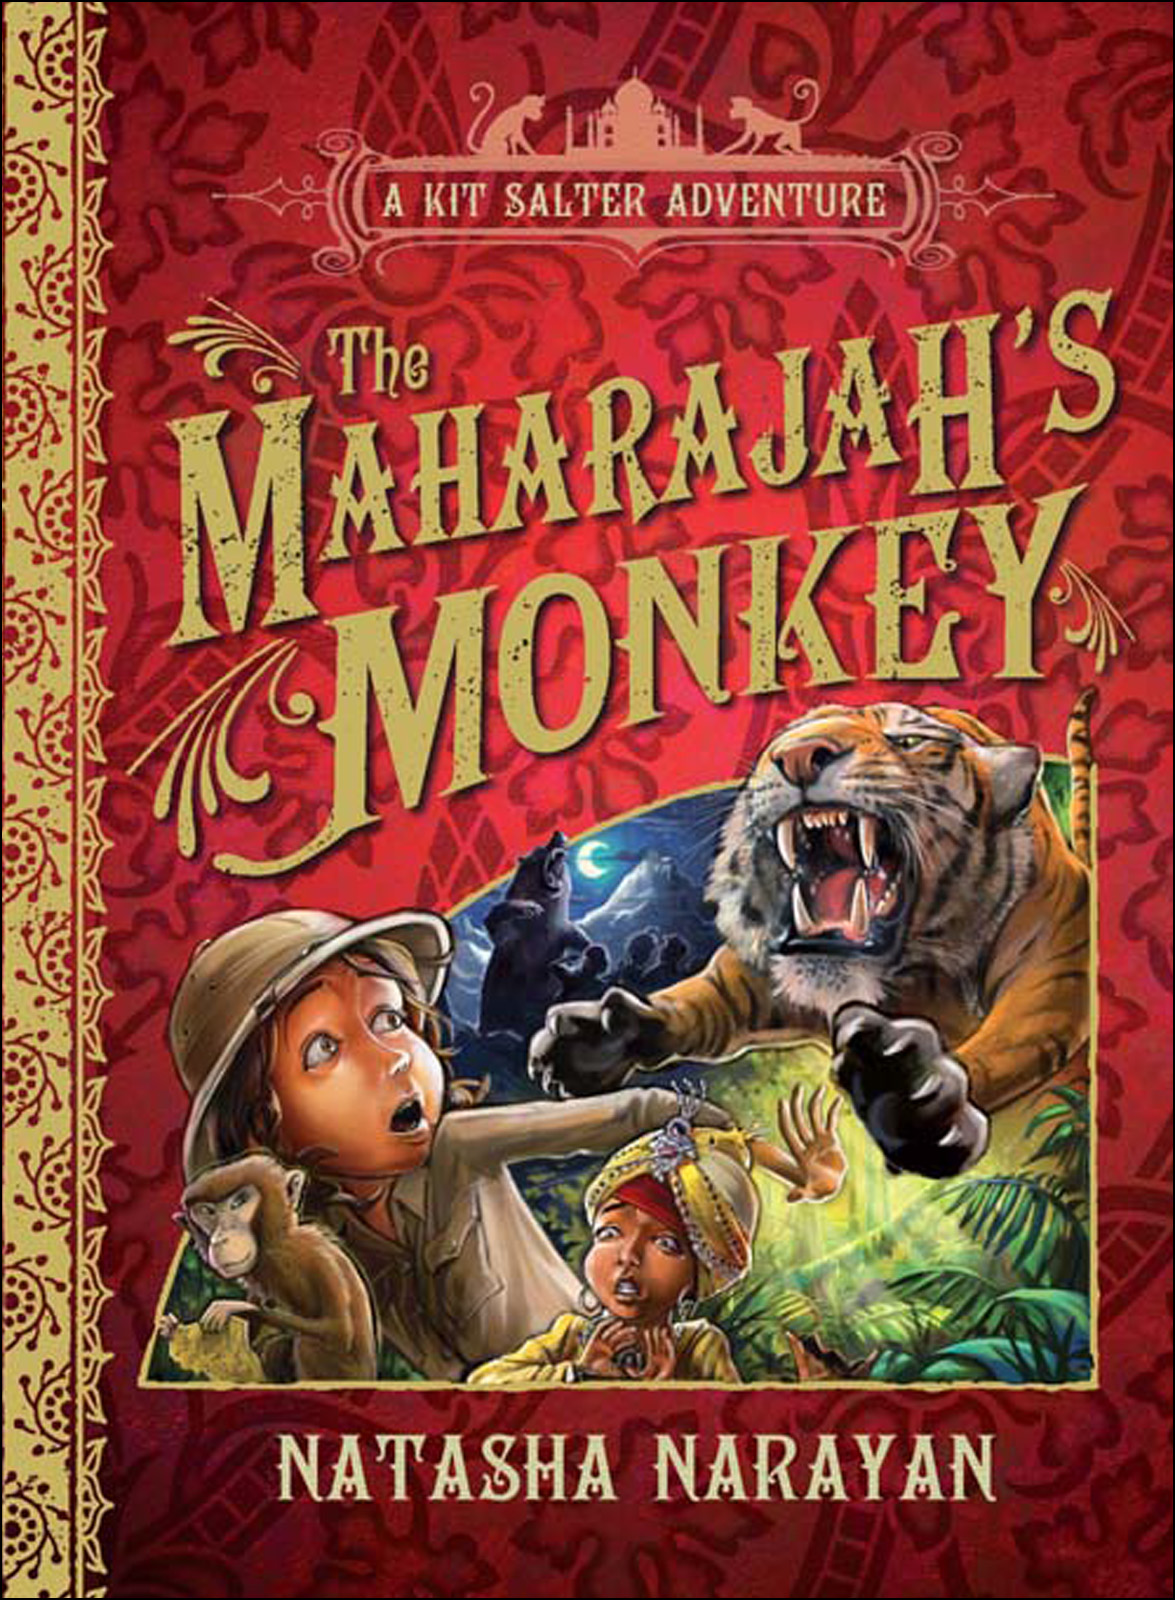 The Maharajah's Monkey (2013) by Natasha Narayan